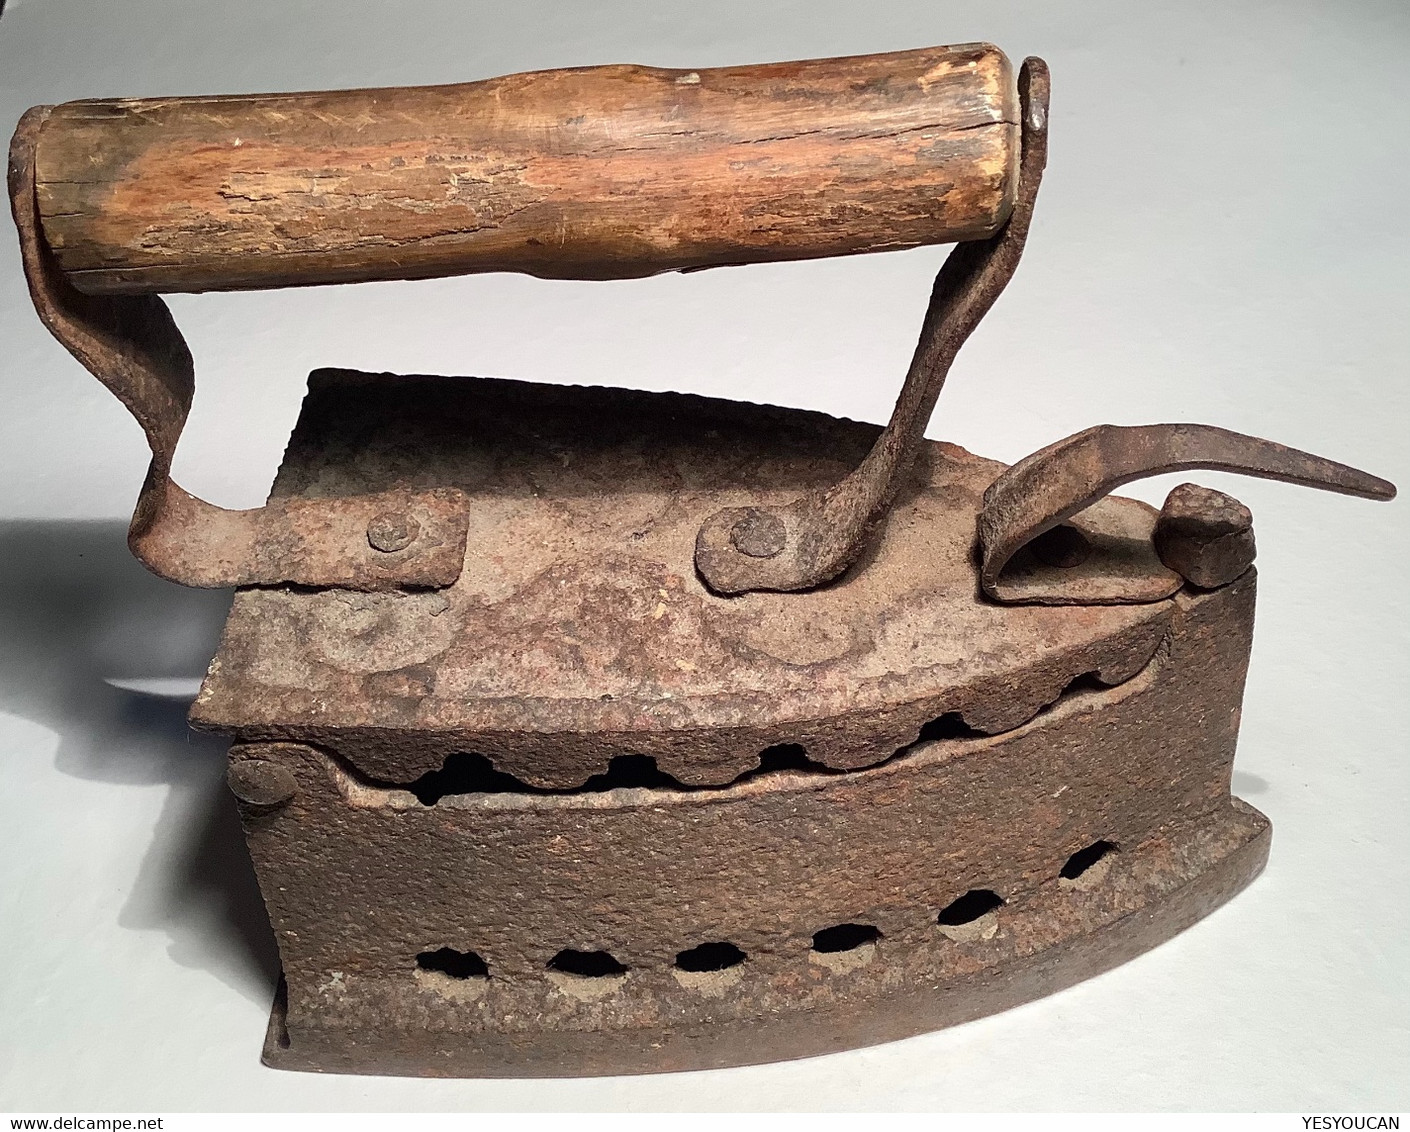 1800-1850 Ancien Fer à Repasser à Braise Bursins Vaud Suisse (Antik Bügeleisen Schweiz Antique Charcoal Iron Switzerland - Art Populaire